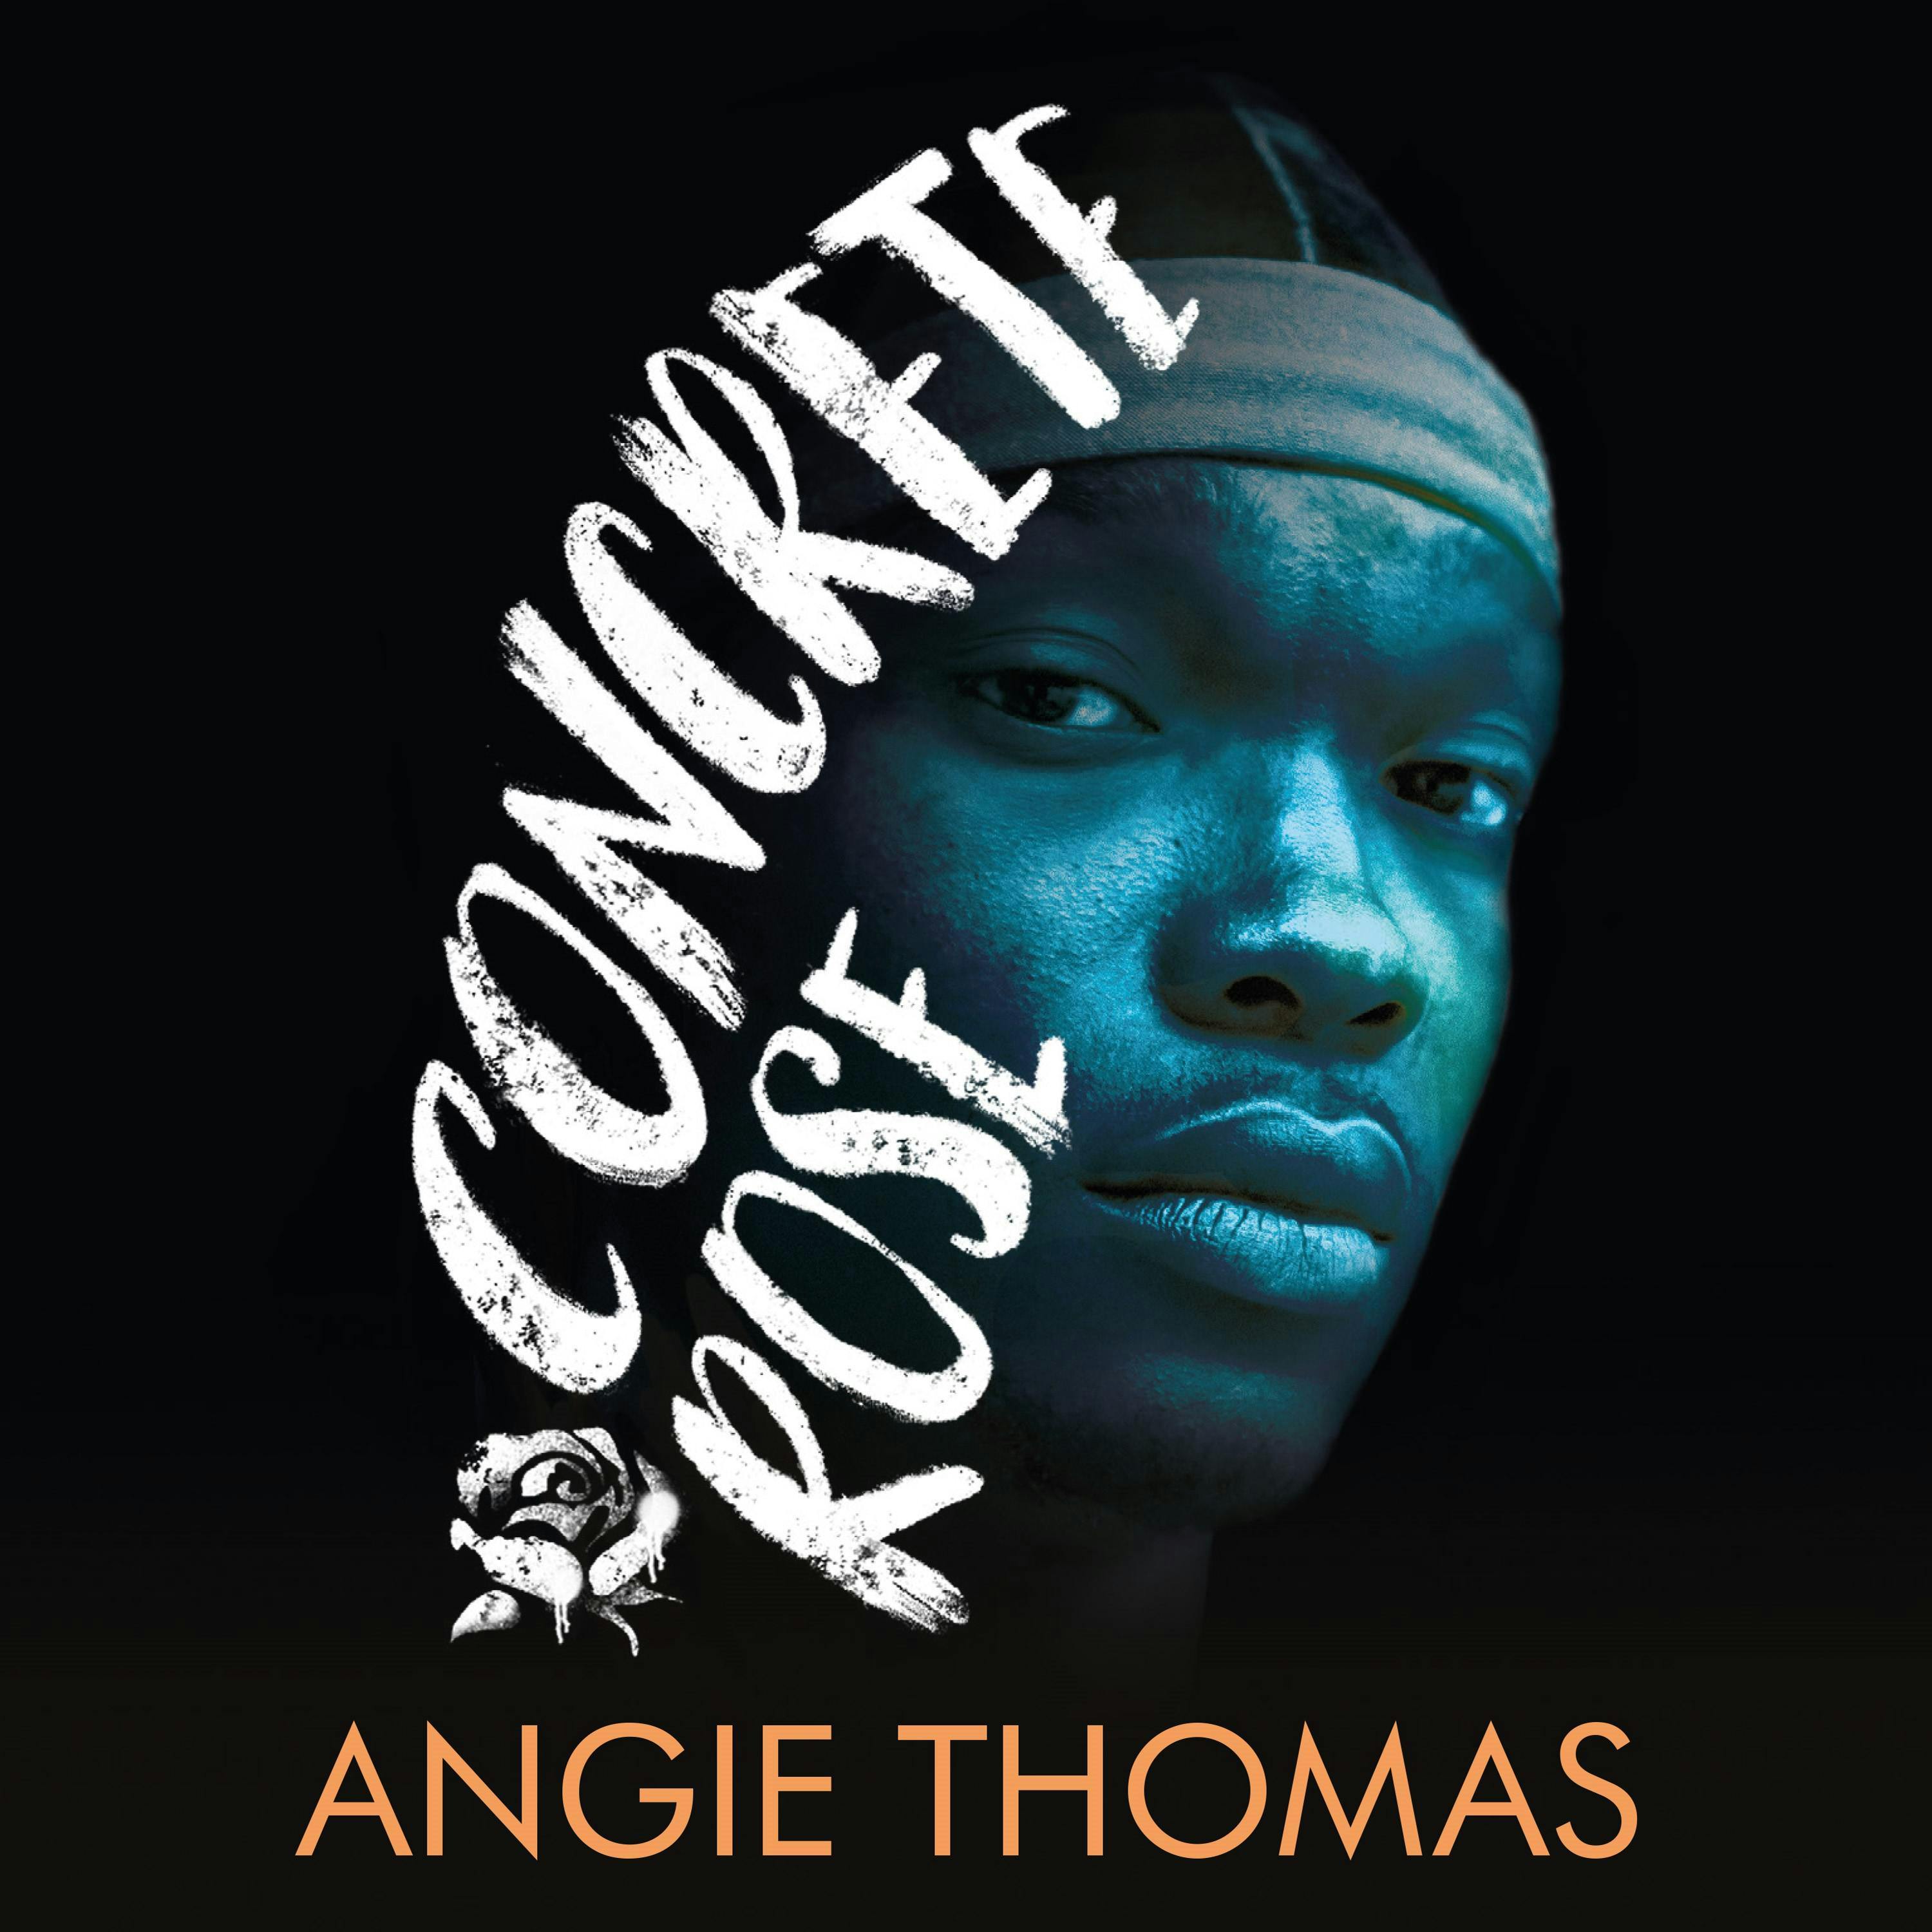 Concrete Rose - Angie Thomas